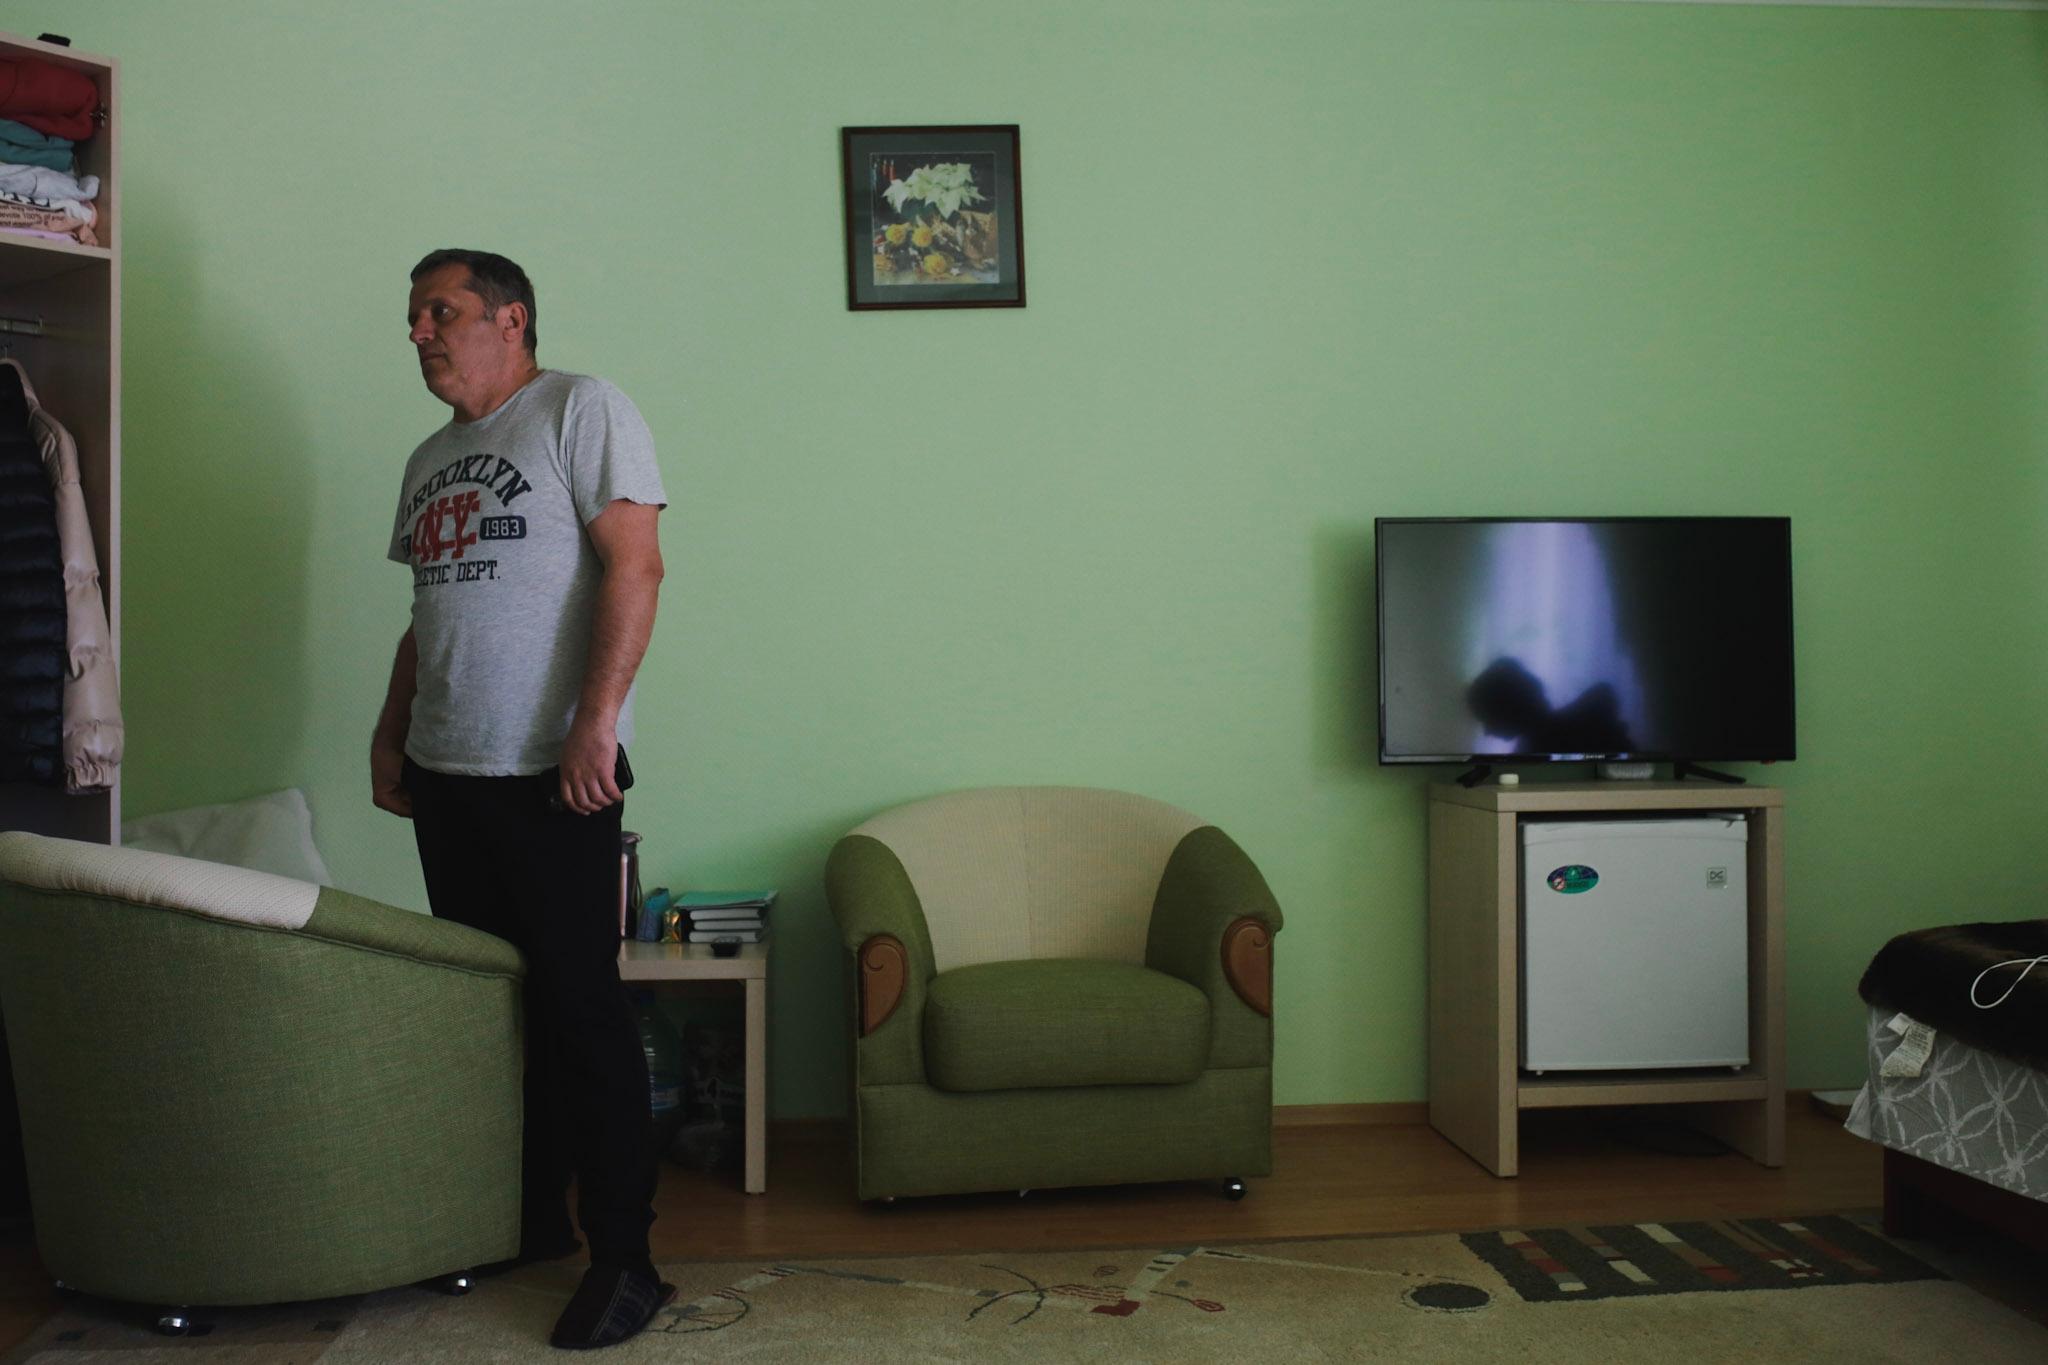 Anadolu/Getty - Resort per rifugiati Ucraini in Moldavia